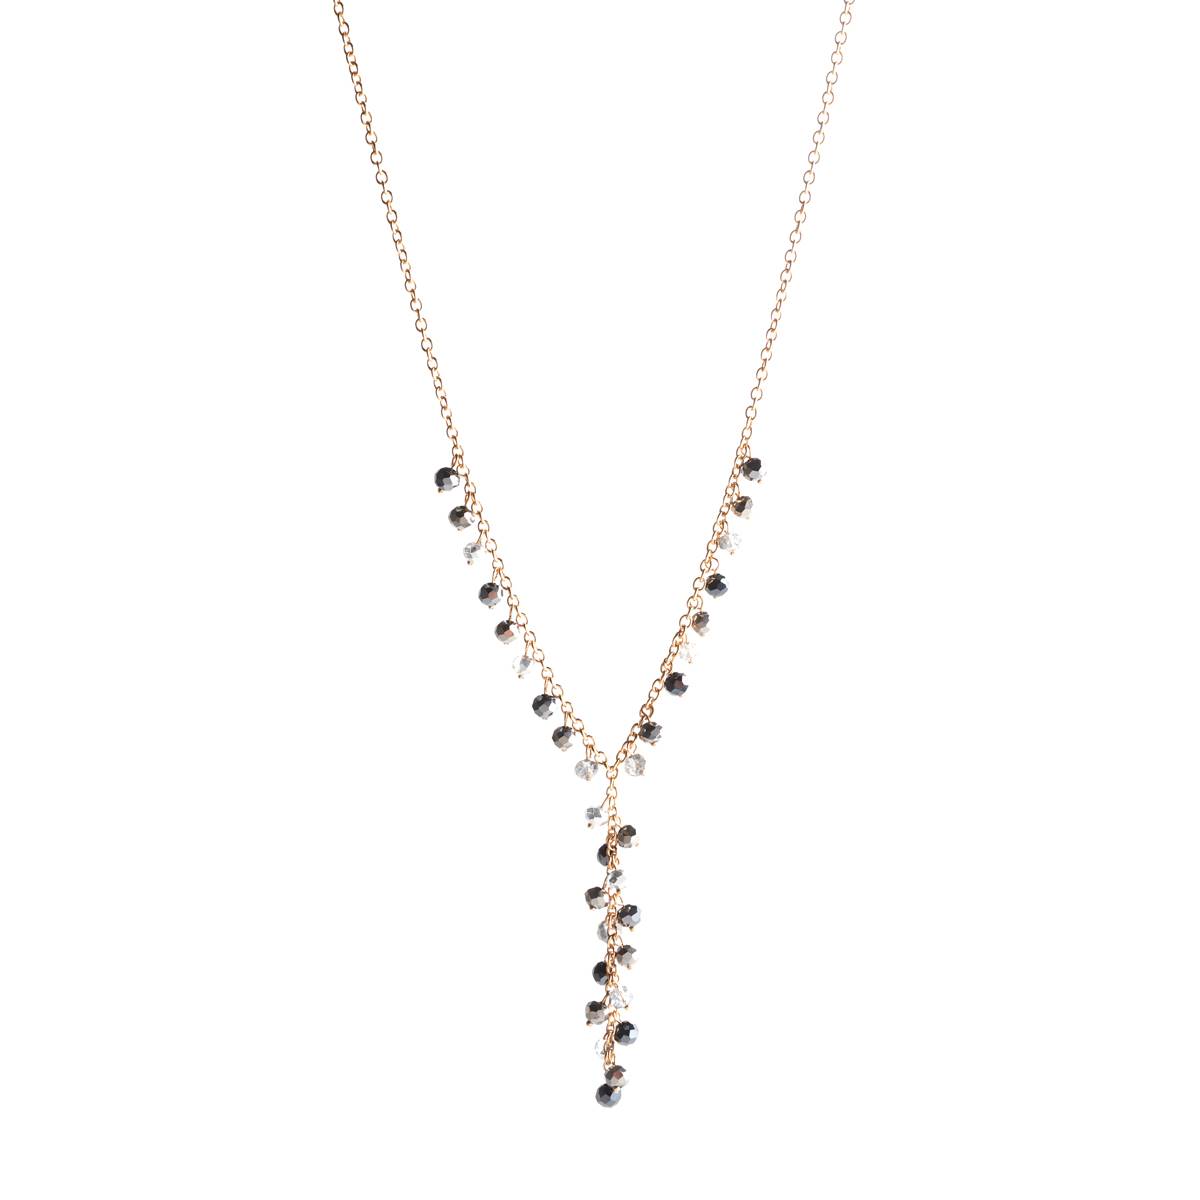 Ashley Cooper(tm) Beaded Lariat Necklace